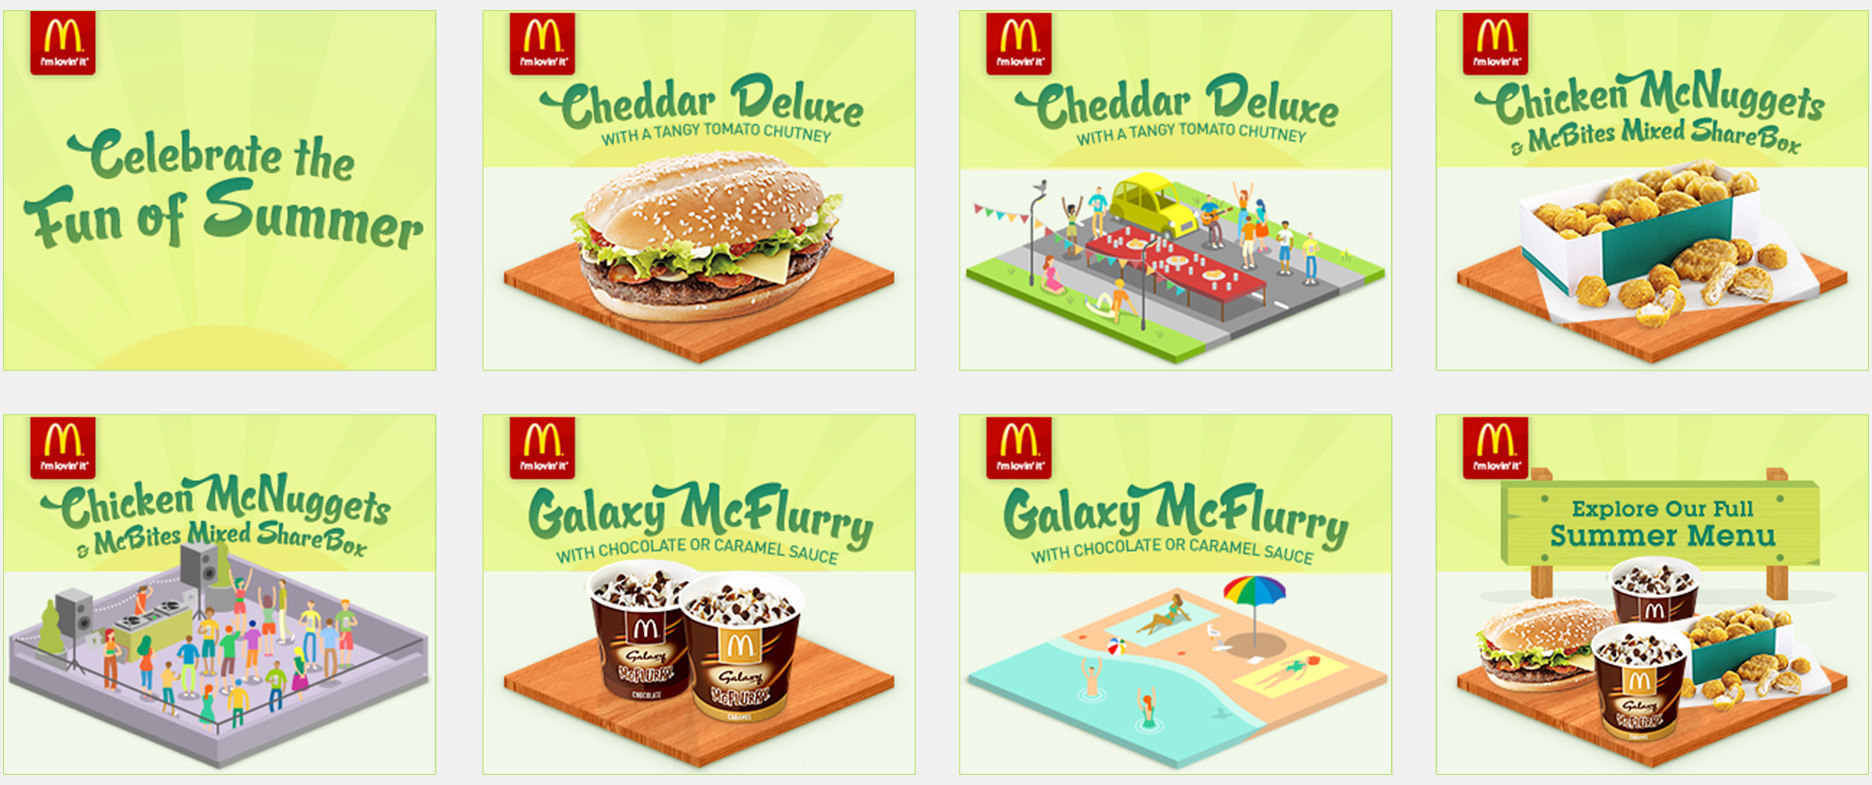 mcdonalds-summer-food-event-design-08